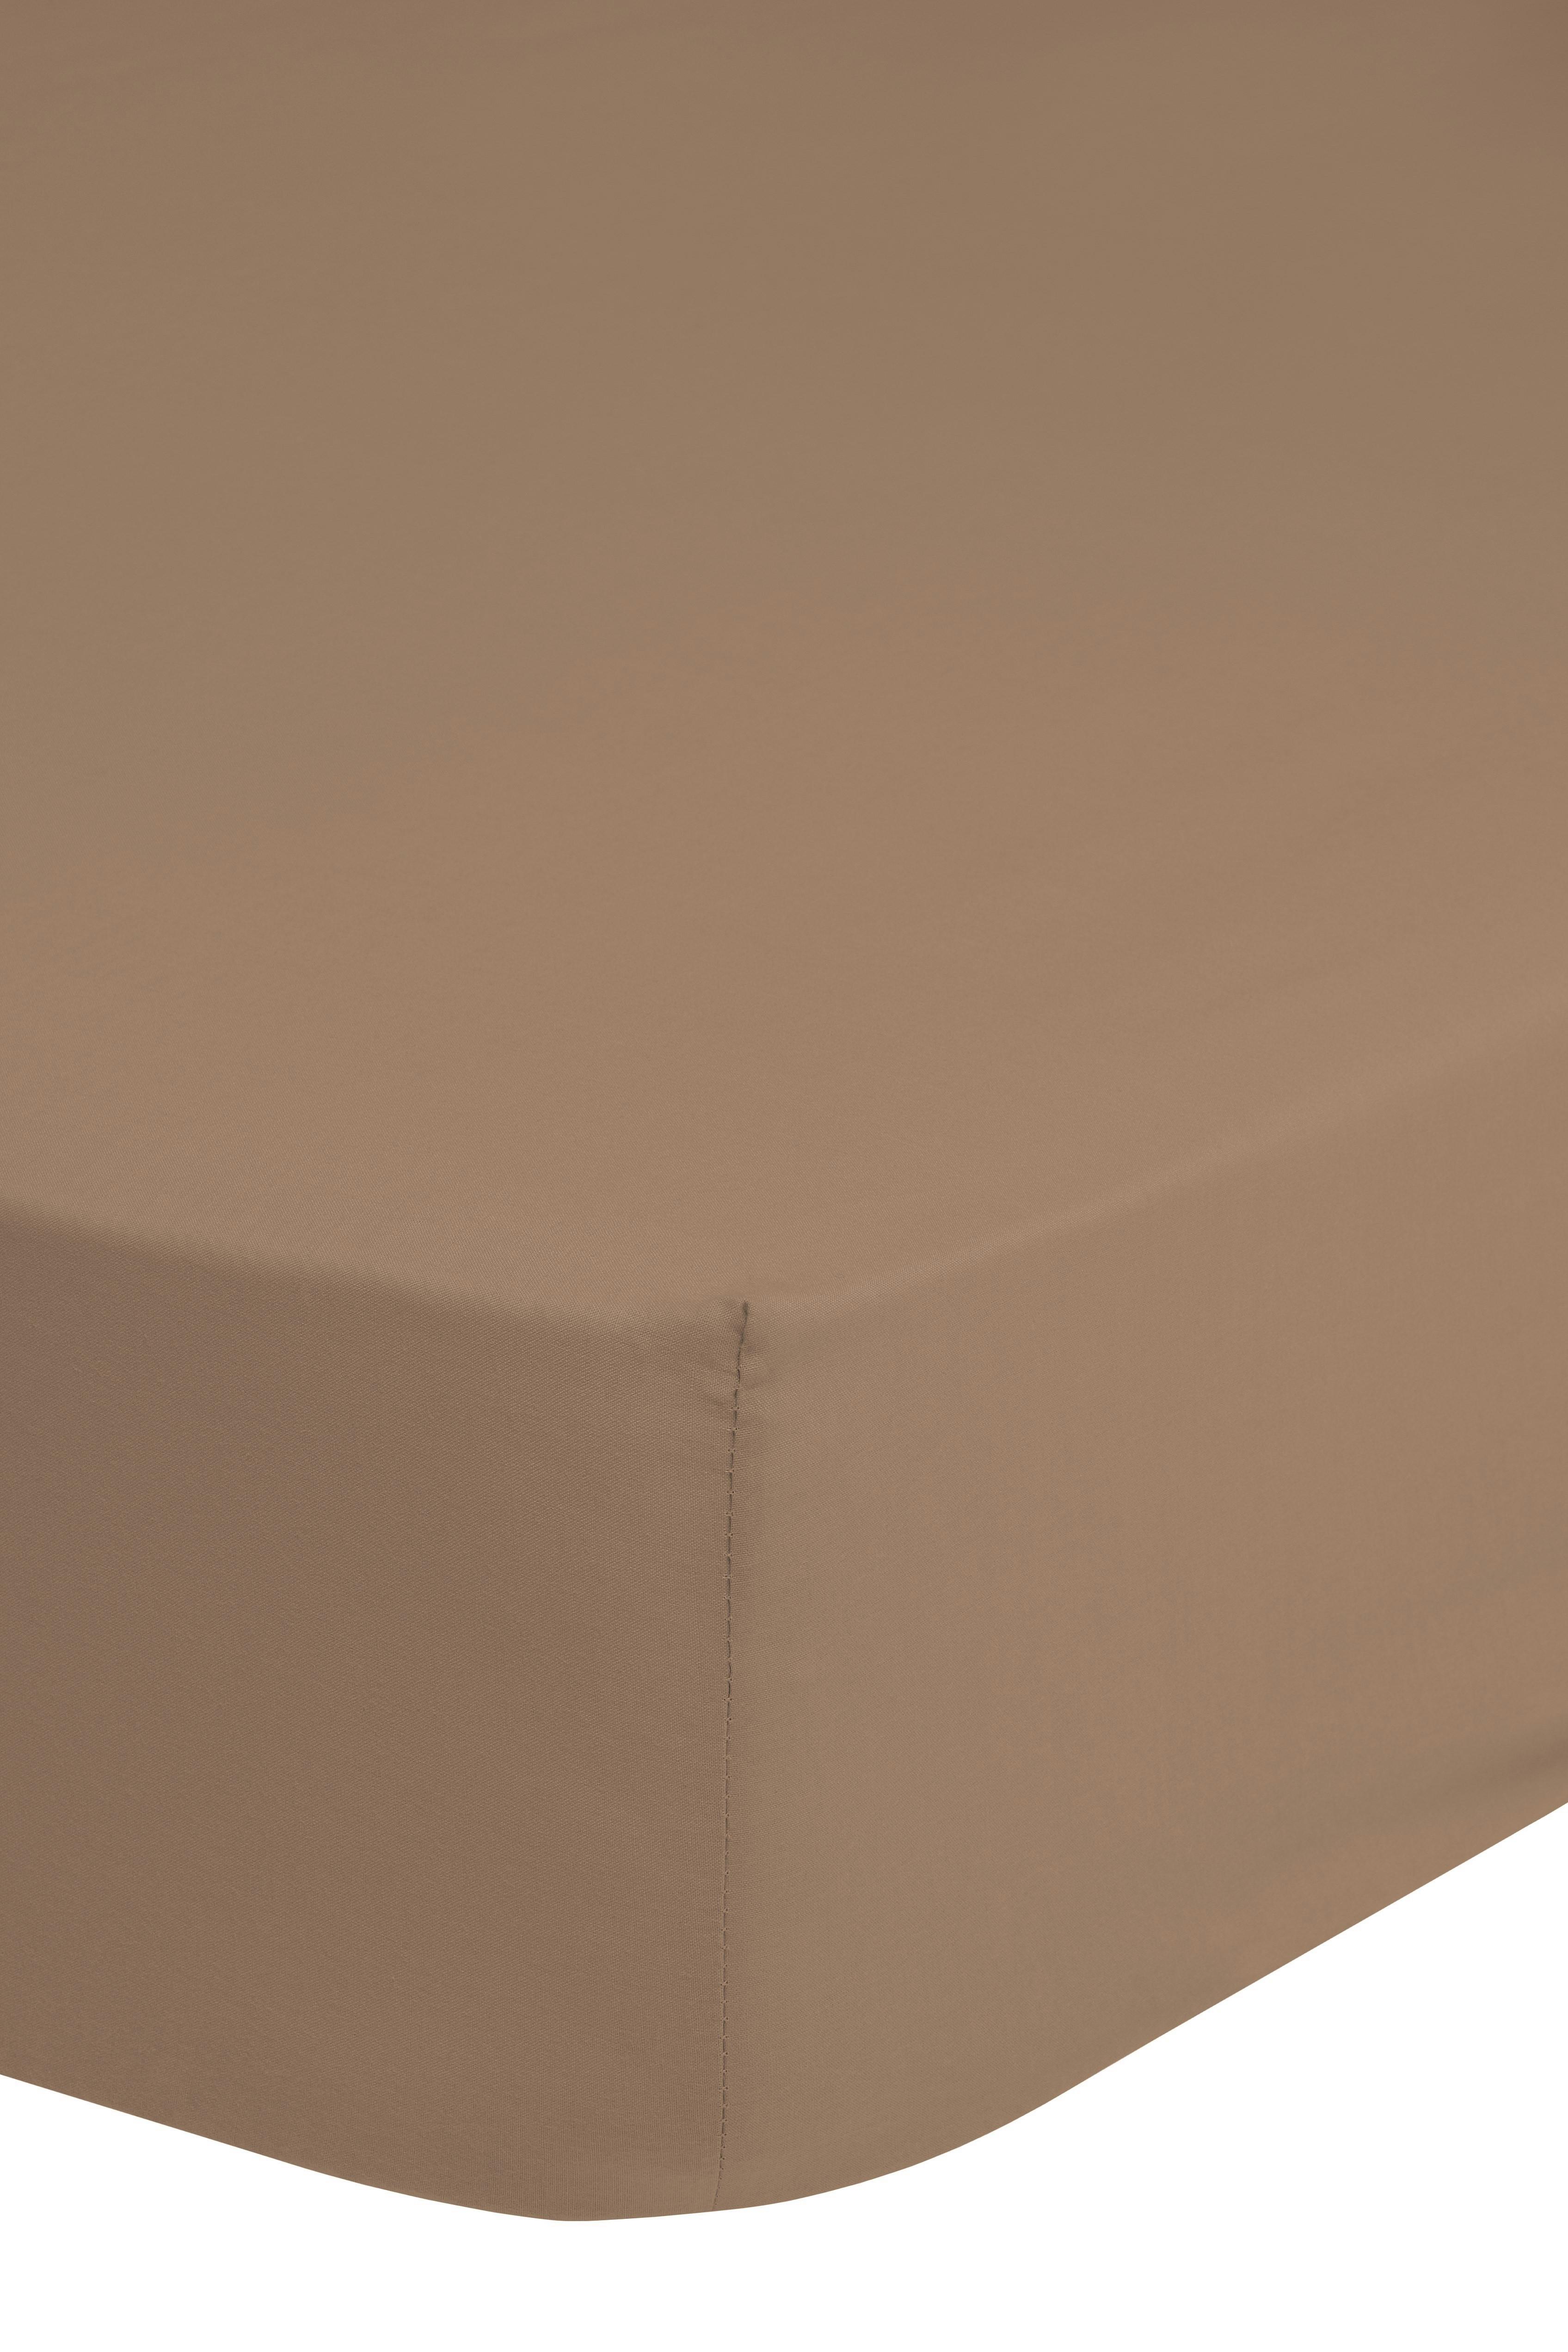 Elastické Prostěradlo Jersey Ca. 200x220cm - pískové barvy, Basics, textil (200/220cm) - MID.YOU